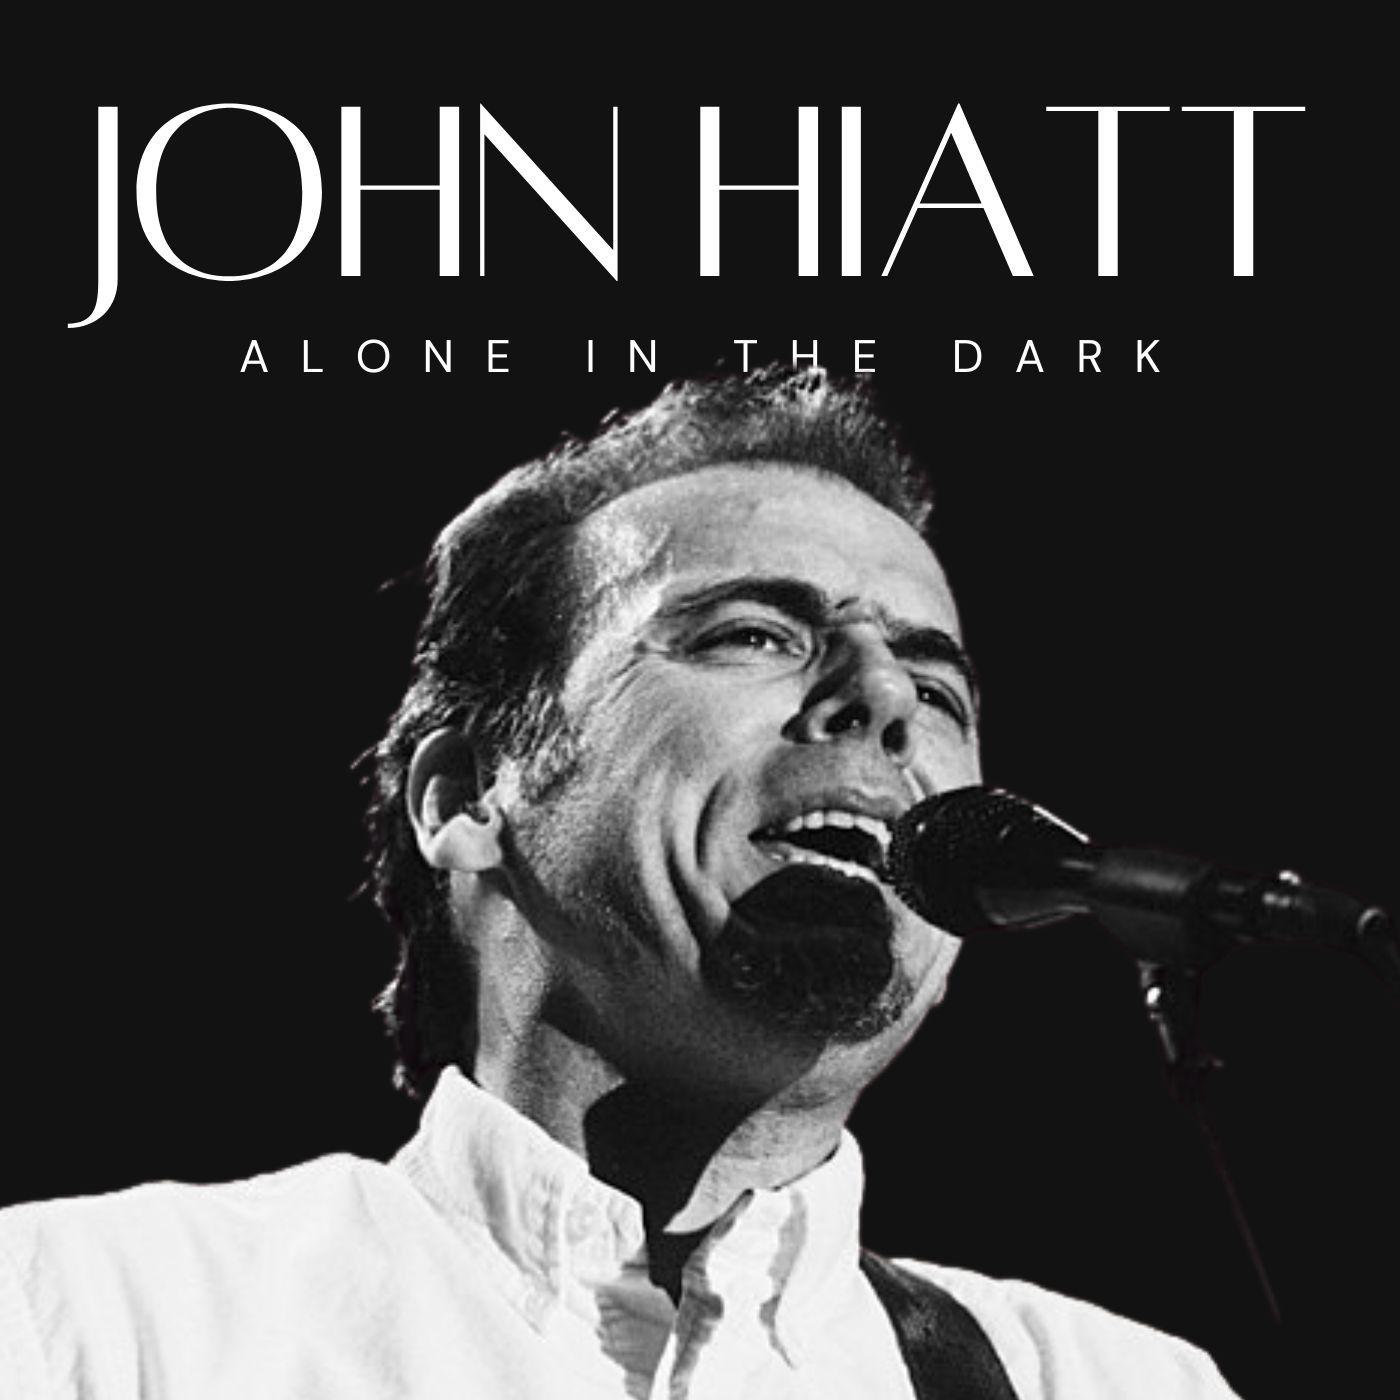 John Hiatt - Drive South (Live)